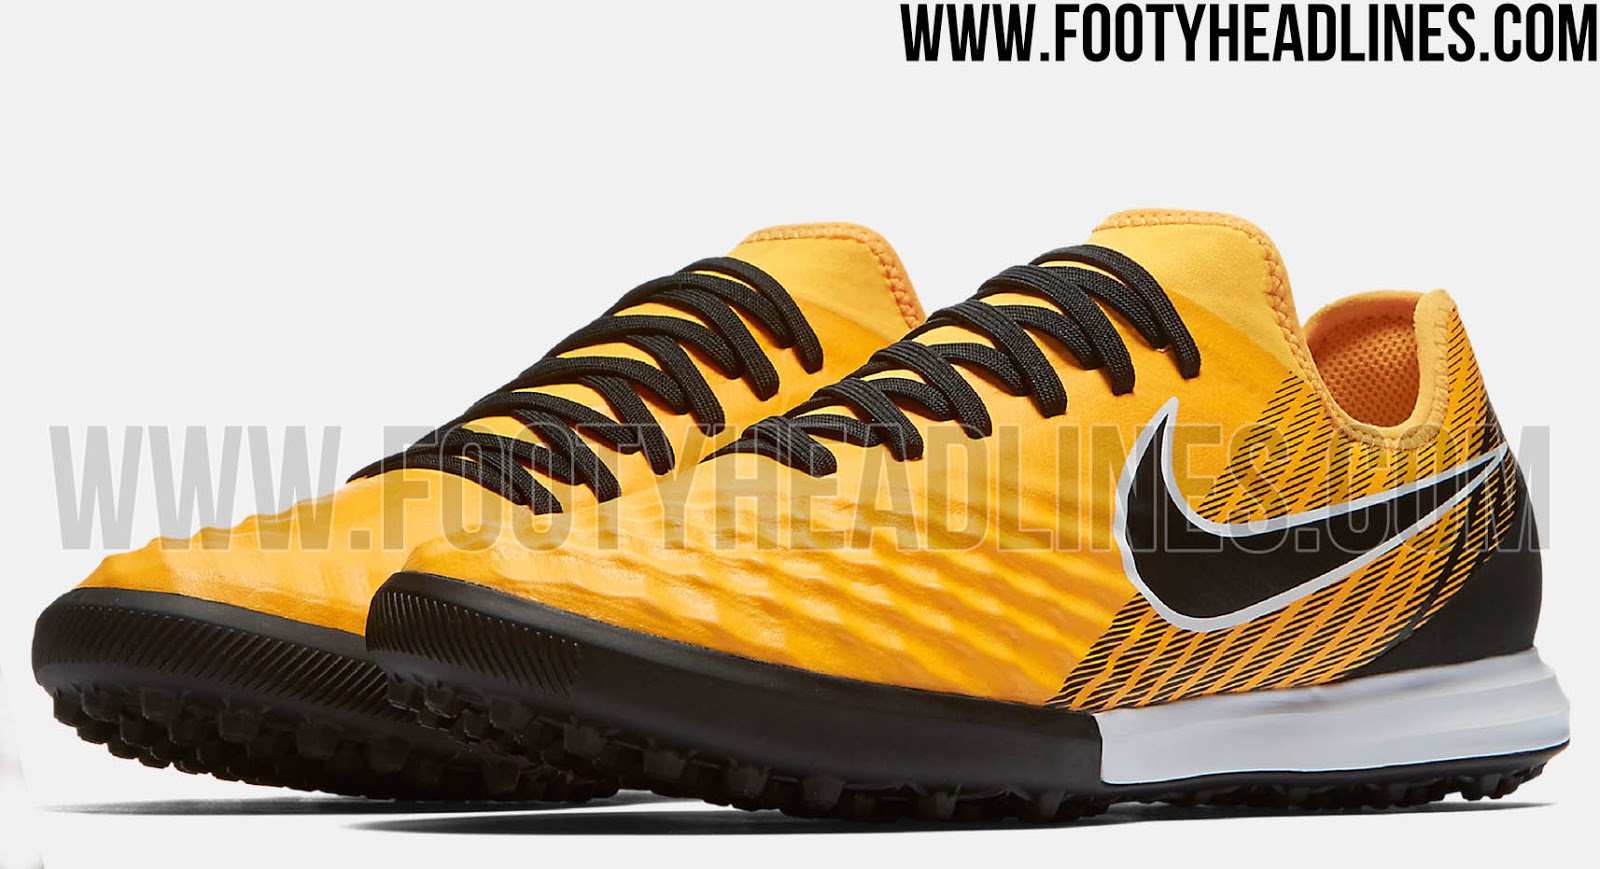 Nike Magista Opus II FG Men's Football Boots.uk